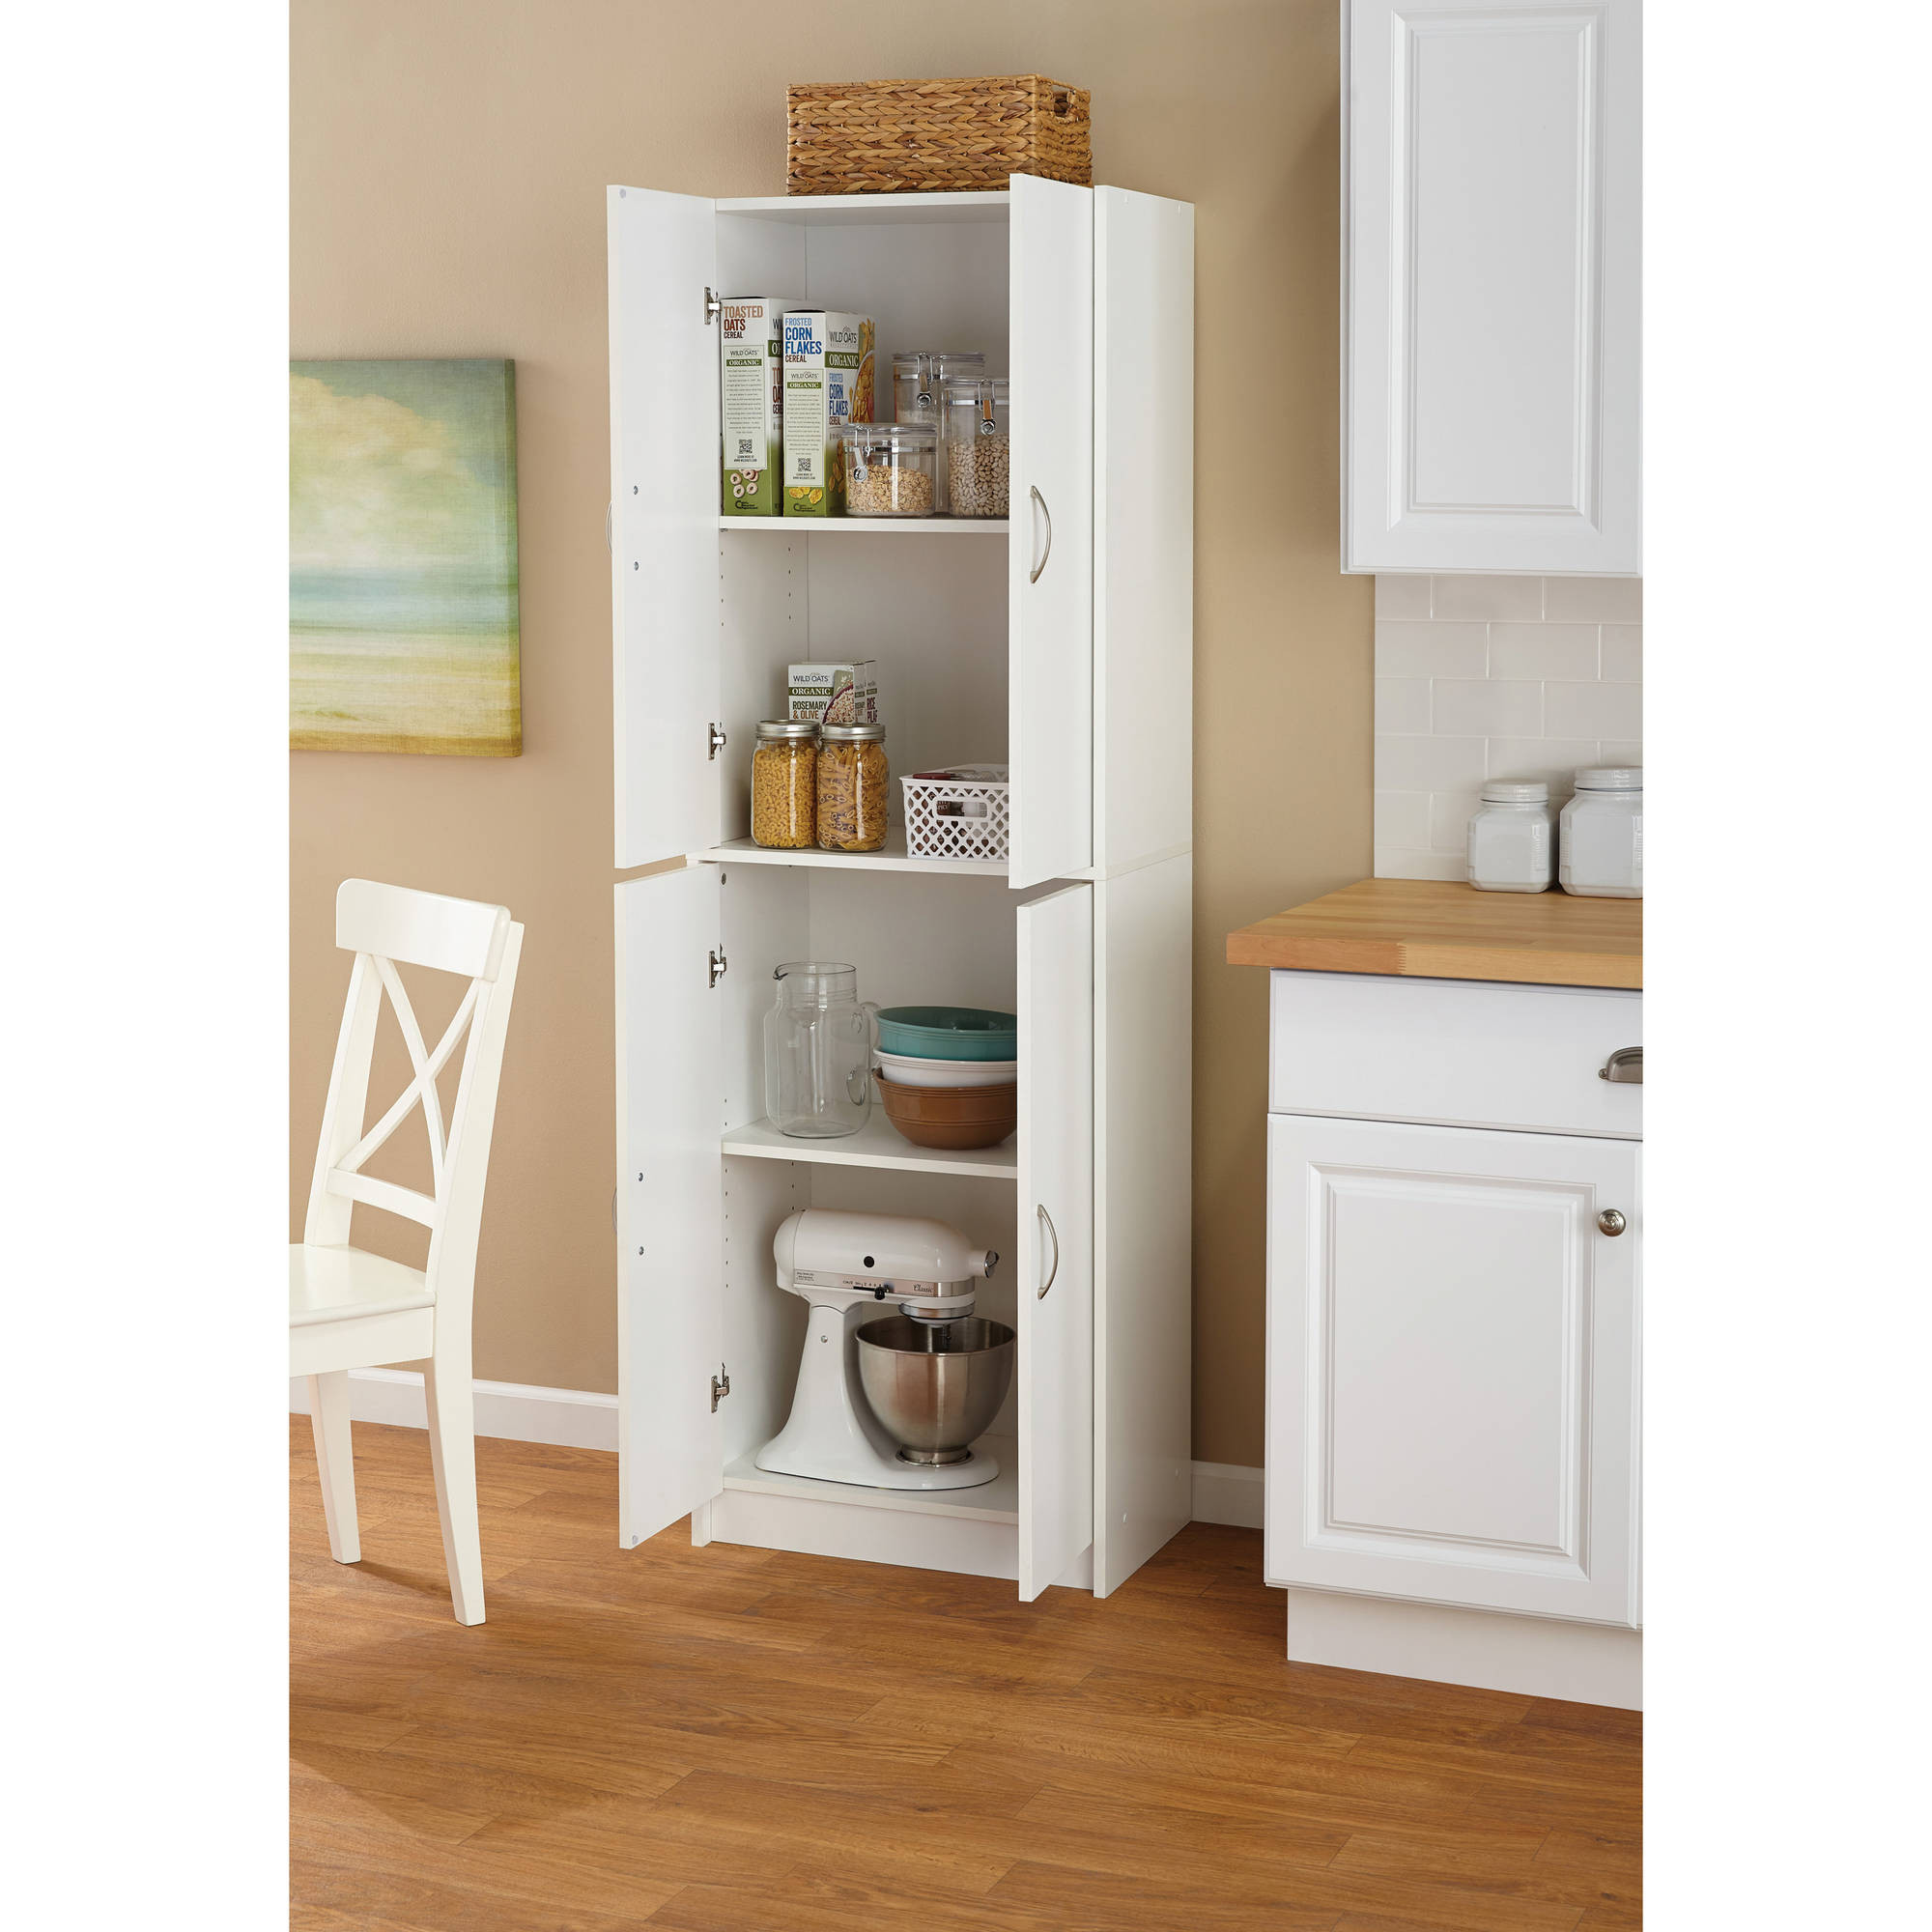 Small Storage Cabinet For Kitchen
 Storage Cabinet with Tempered Glass Door Walmart